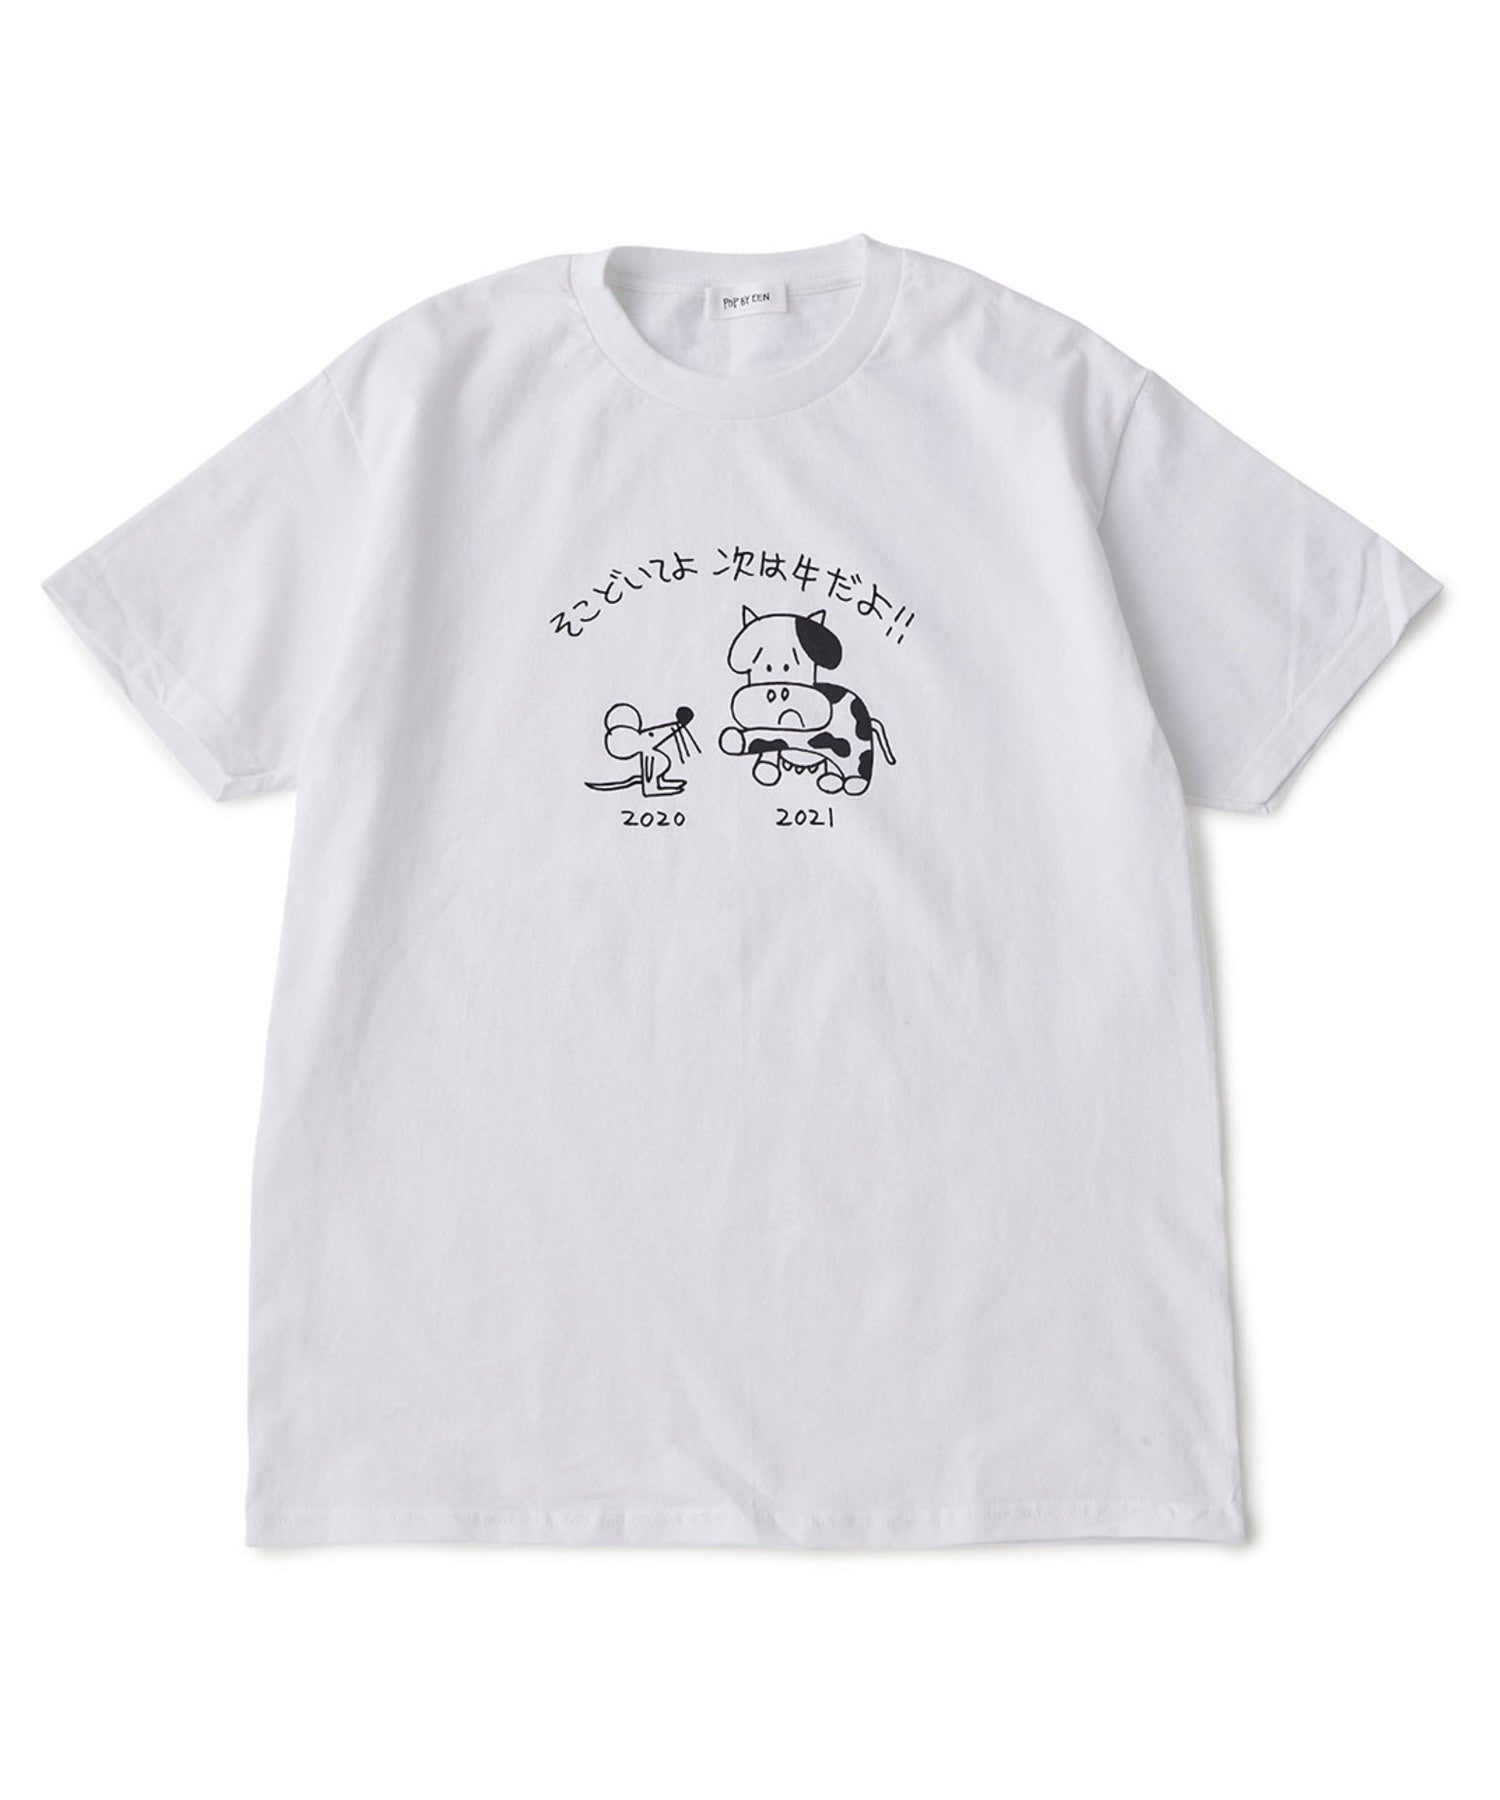 Pop By Jun Web限定 21 Anniversary Tシャツ トップス Tシャツ カットソー 通販 J Adore Jun Online